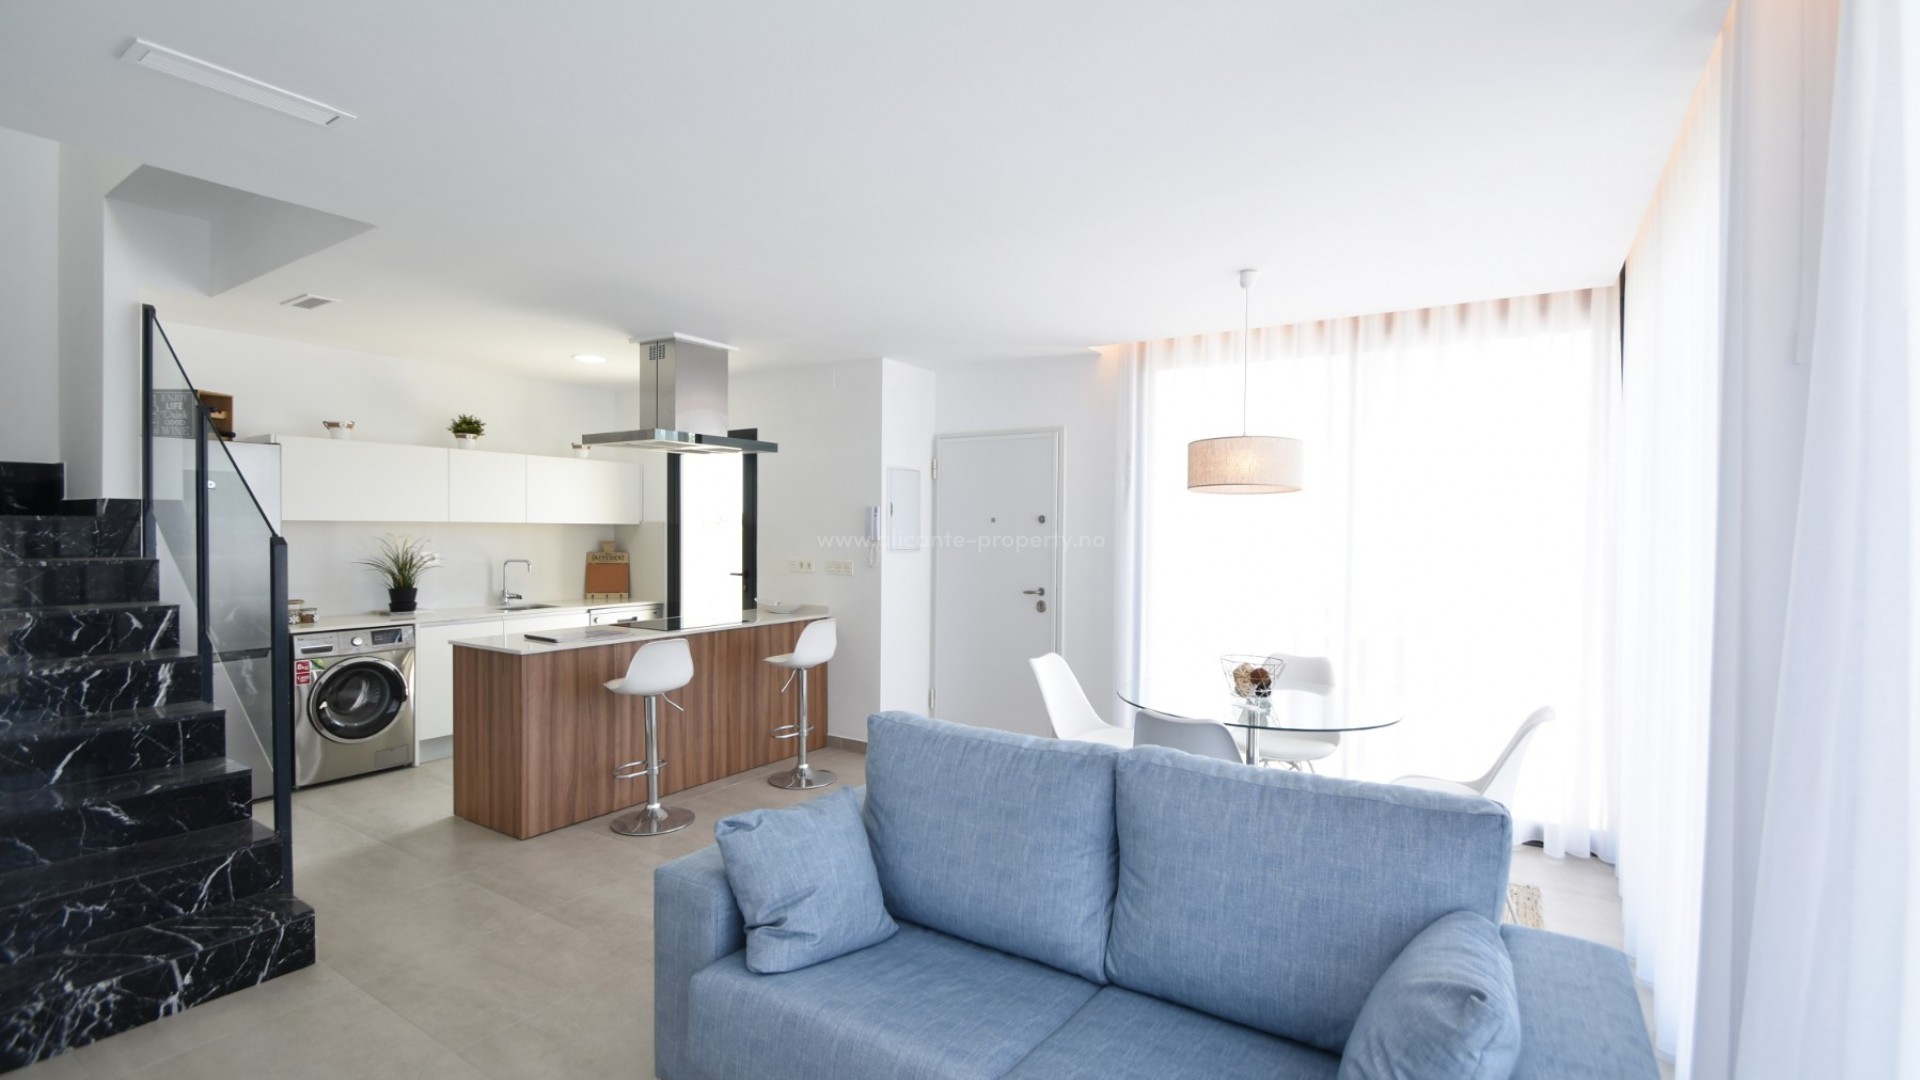 Villa i Los Montesinos, Alicante, huset har 104,7 m2, 3 soverom, 2 bad, terrasse på 30 m2, 30 minutter med bil fra Alicante flyplass, 10 min til strand.   